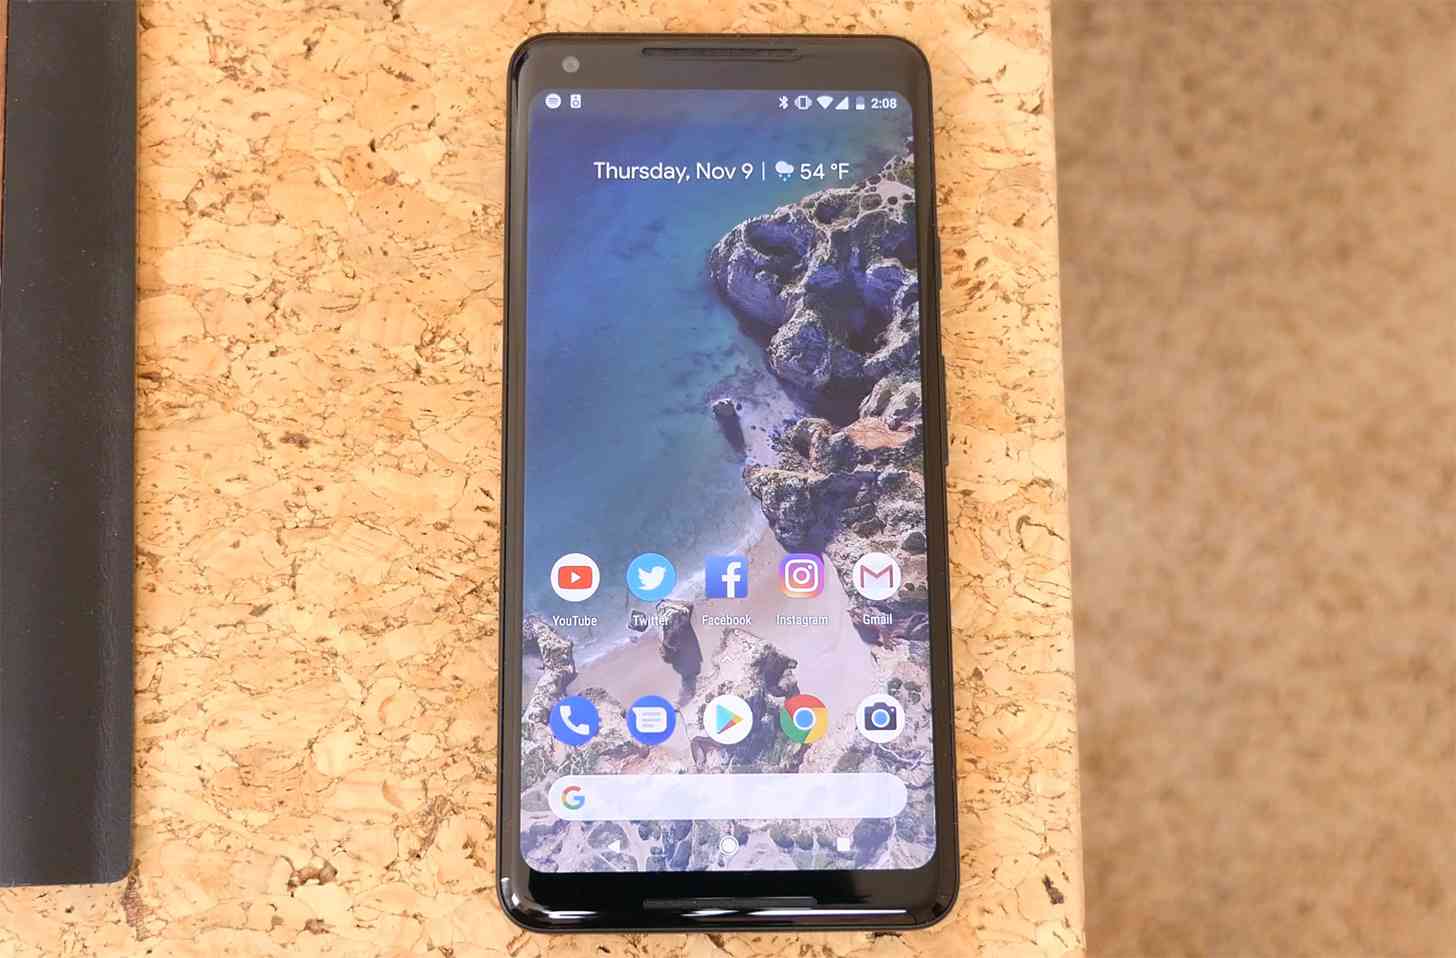 Google Pixel 2 XL hands-on review video